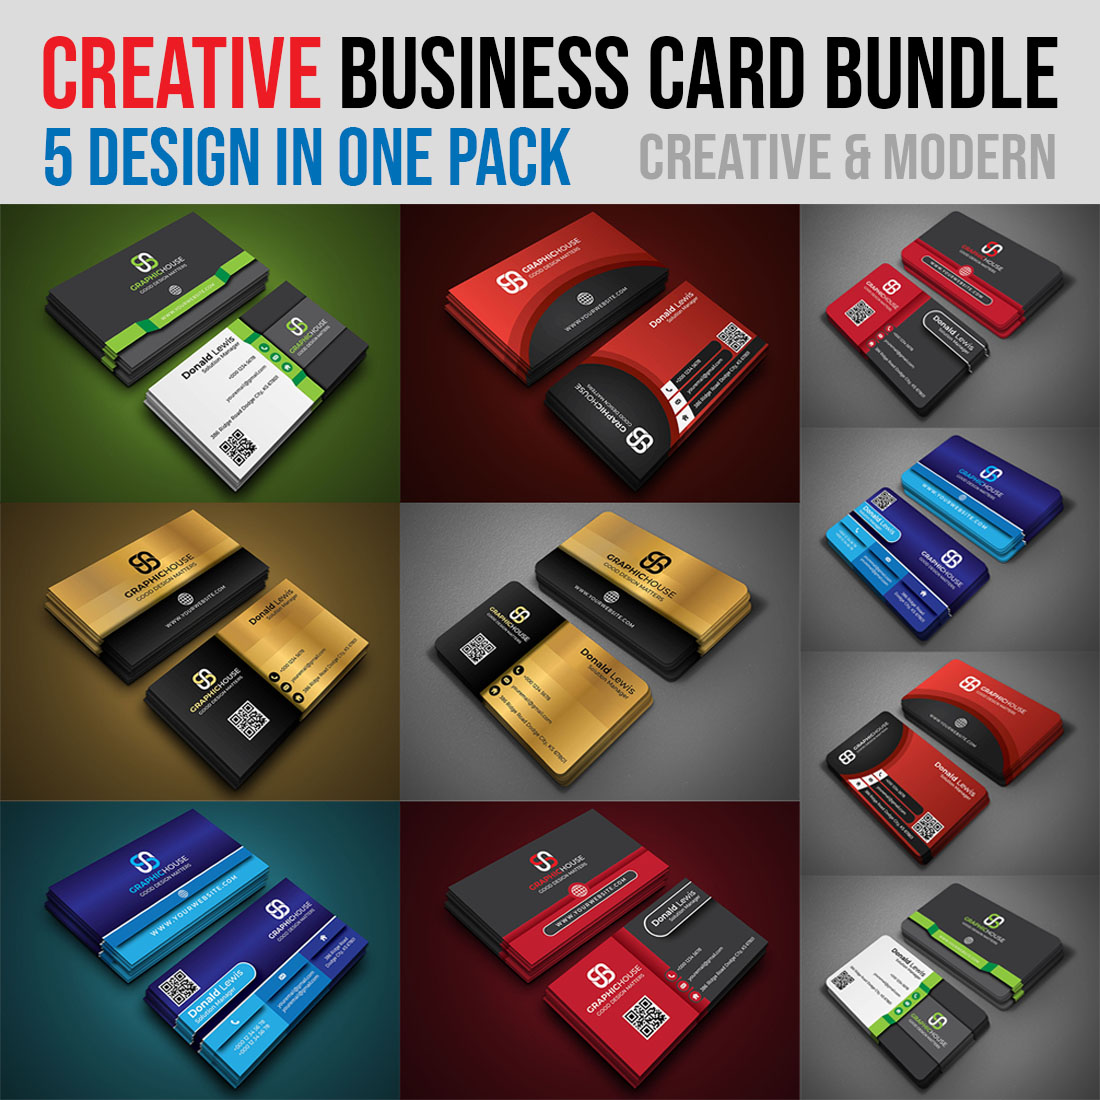 Business Card Design Bundle cover image.